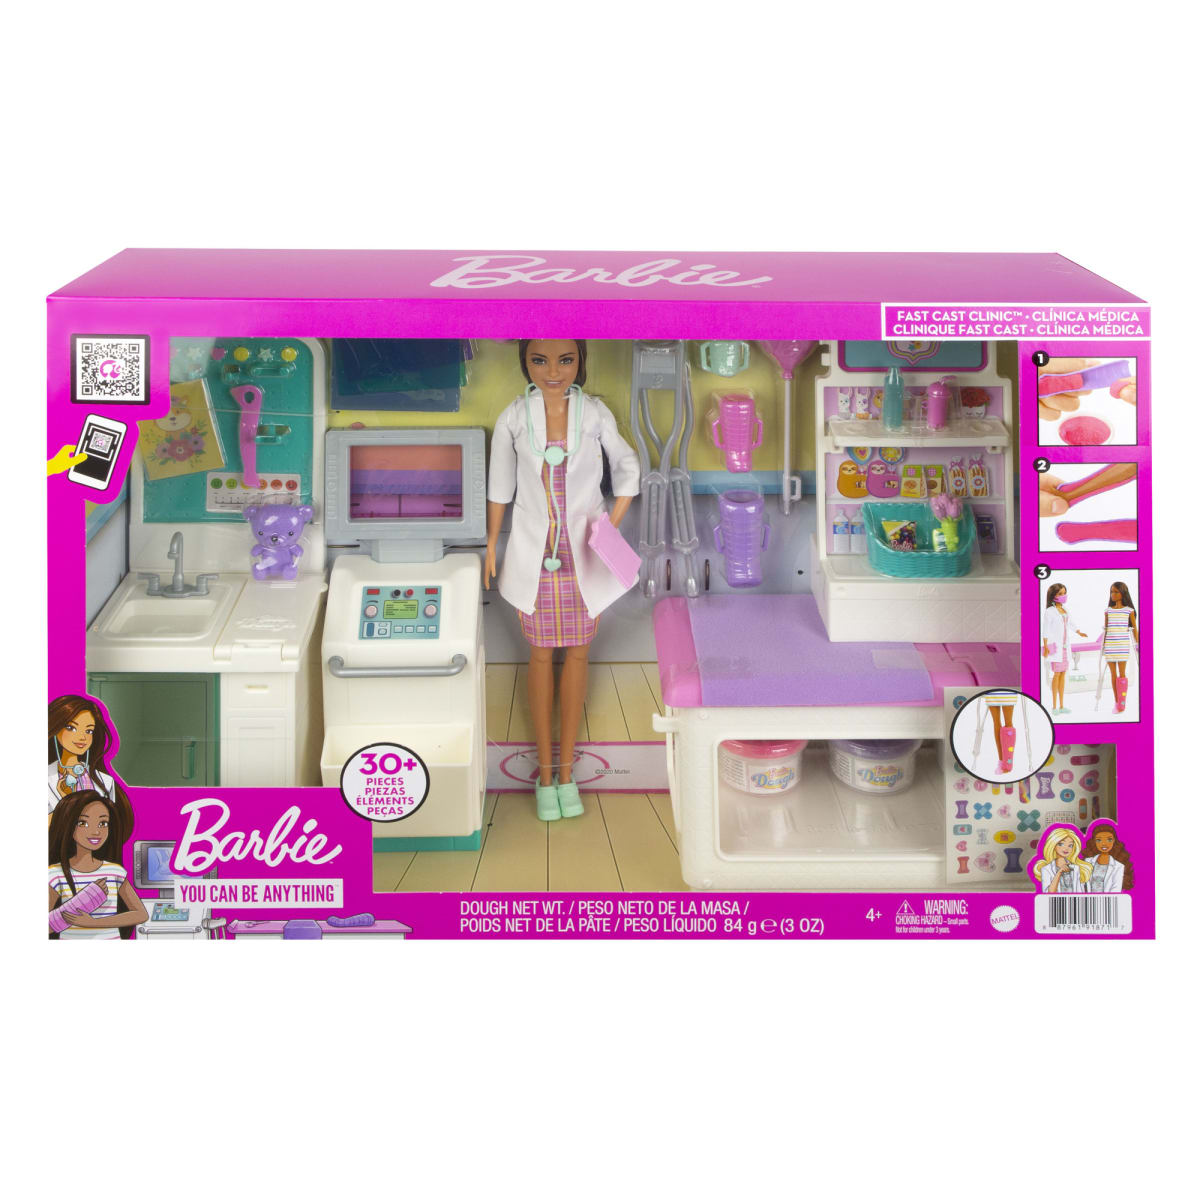 Barbie Fast Cast Clinic nukke leikkisetti  verkkokauppa